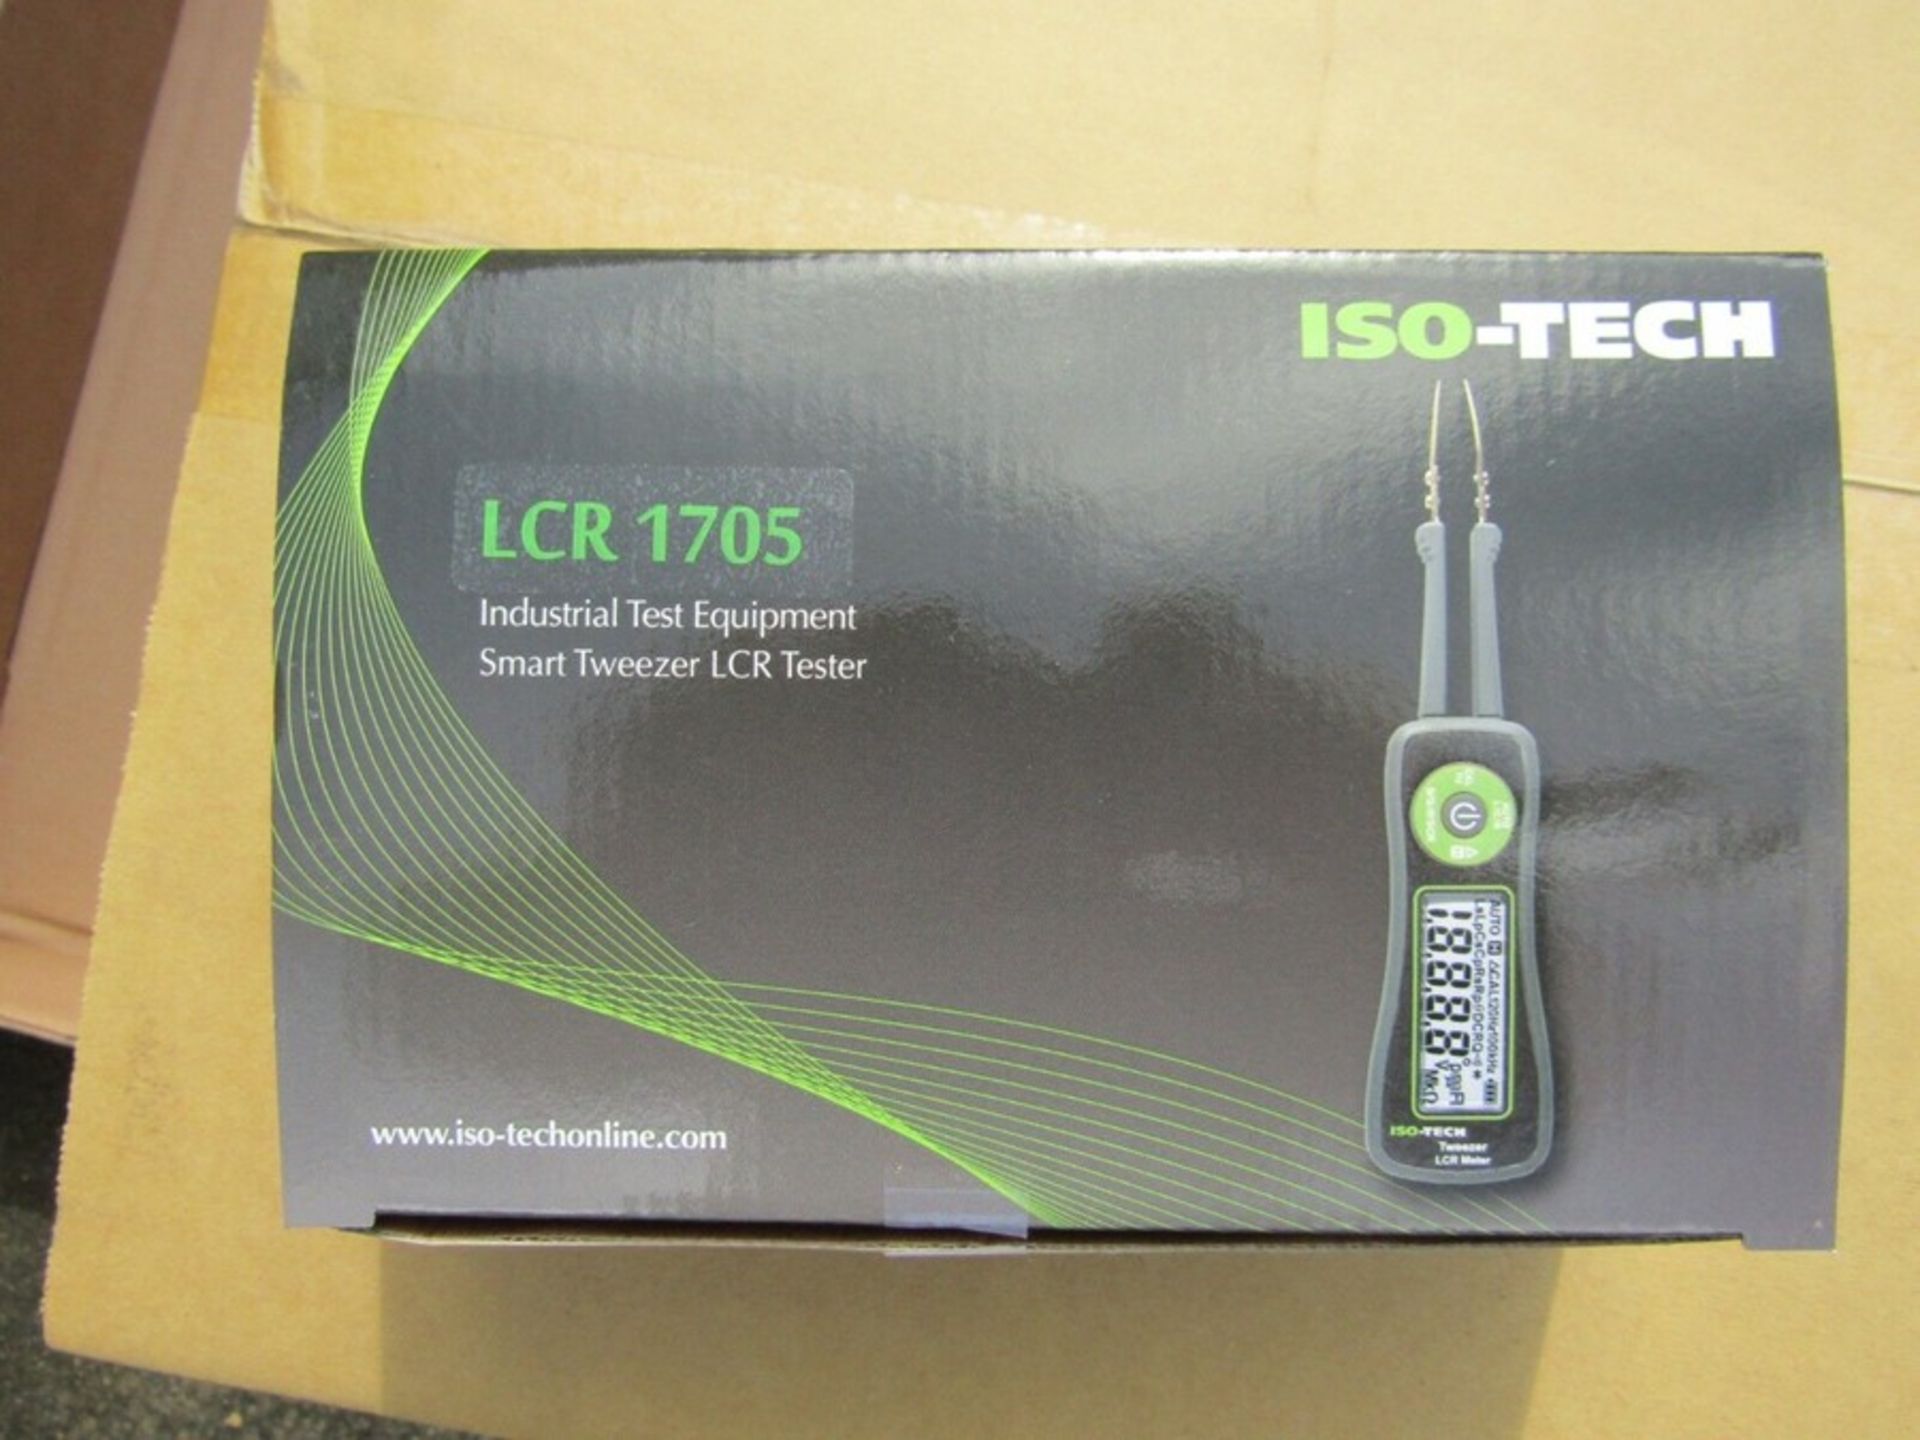 NEW ISO-TECH Smart Tweezer LCR Tester LCR 1705 - T&M / J11 8659824 - Image 2 of 3